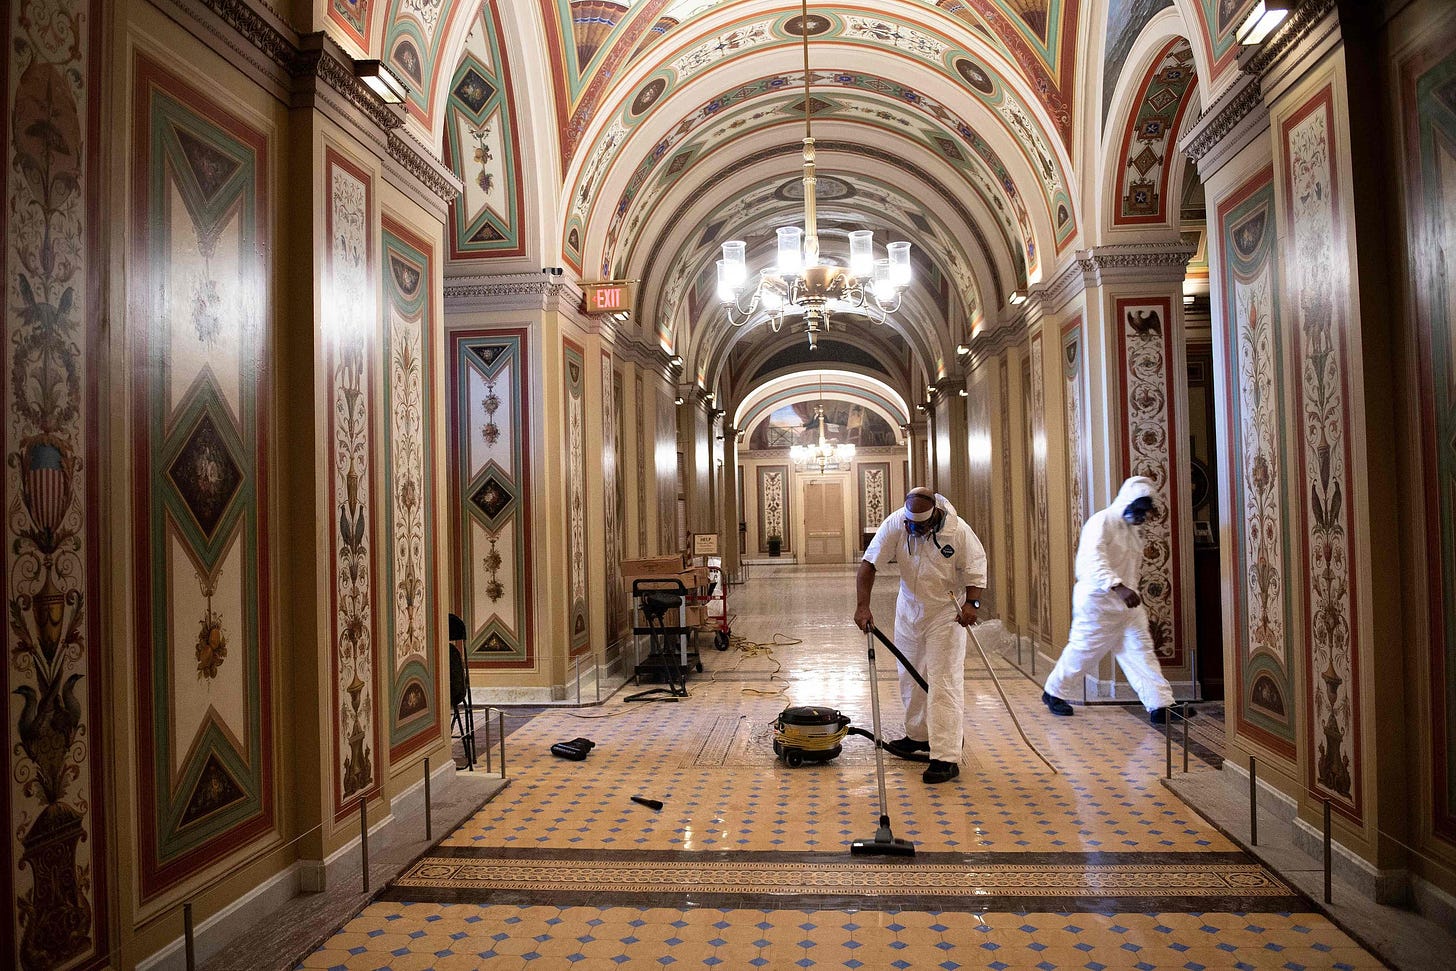 Photos: Damage inside the US Capitol